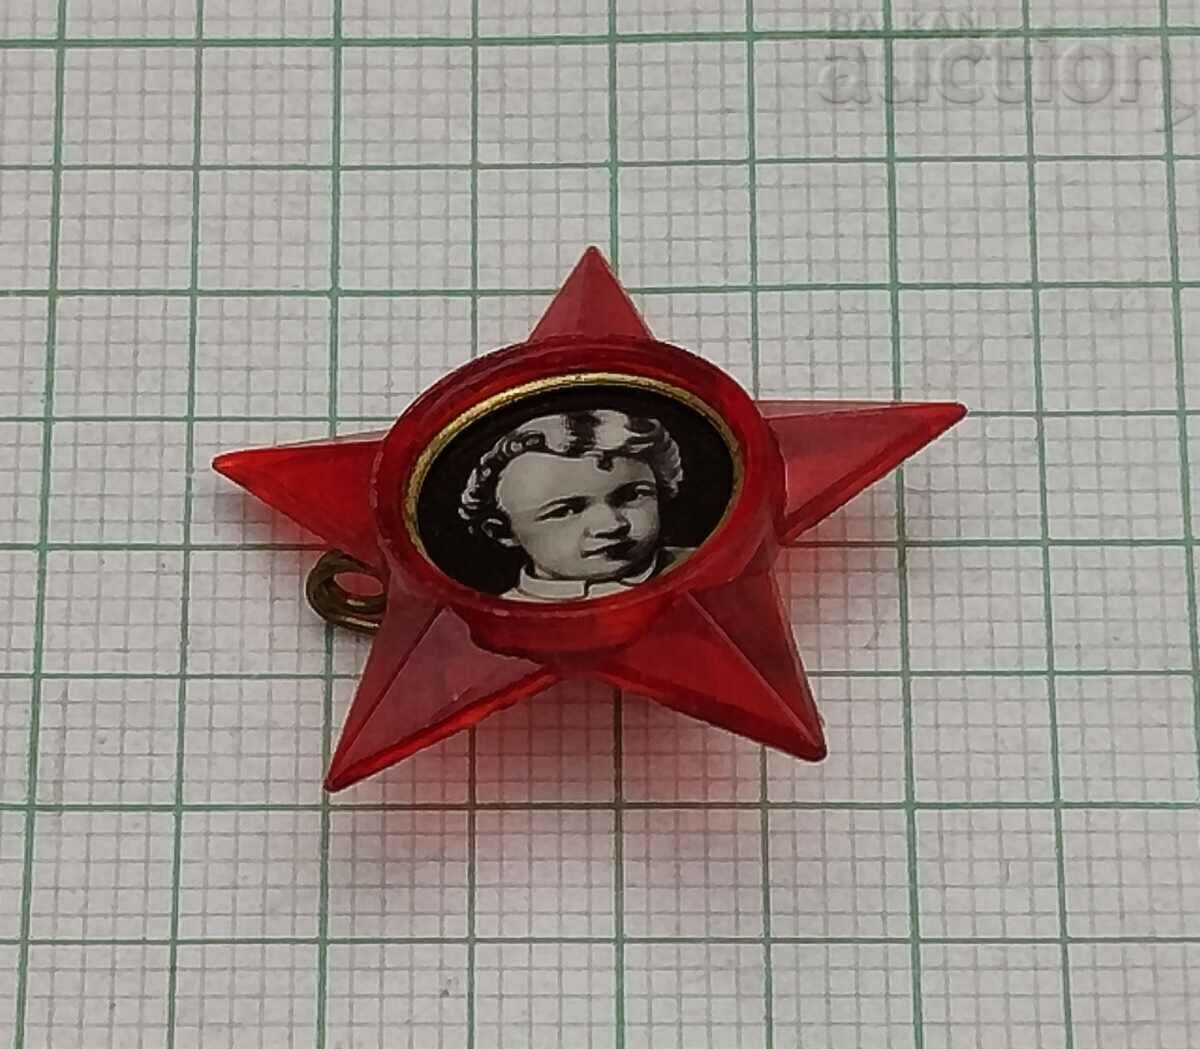 OCTOBER USSR YOUTH ORGANIZATION BADGE/